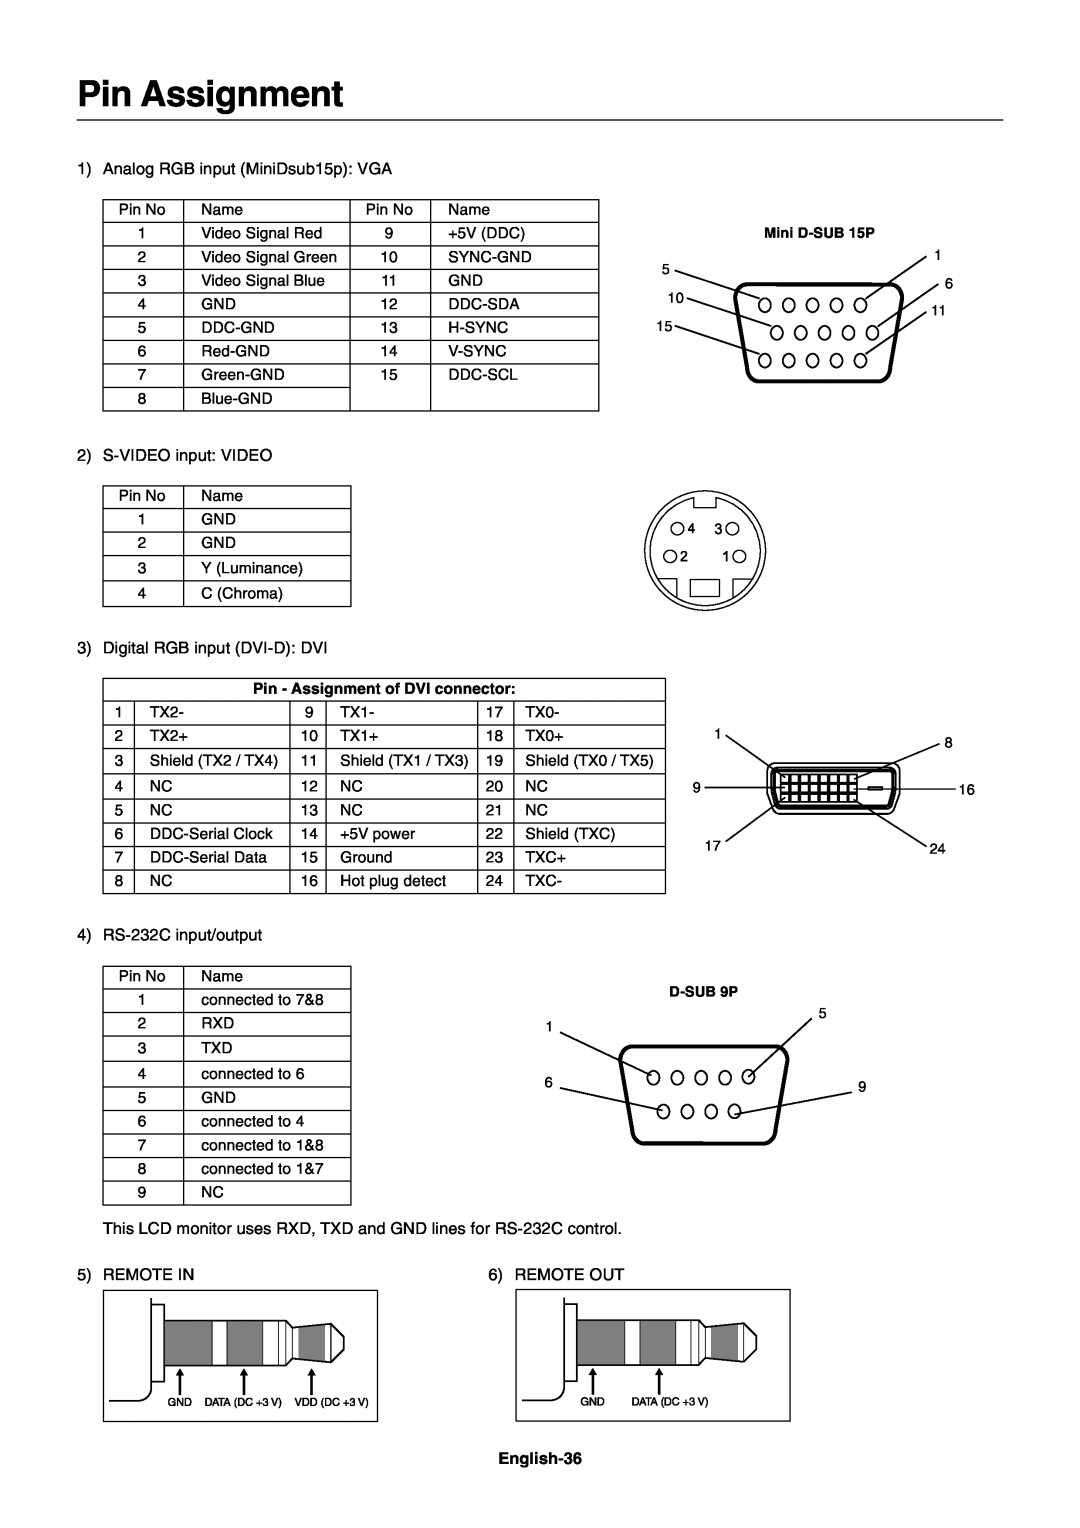 NEC X461UN user manual Pin Assignment, English-36 